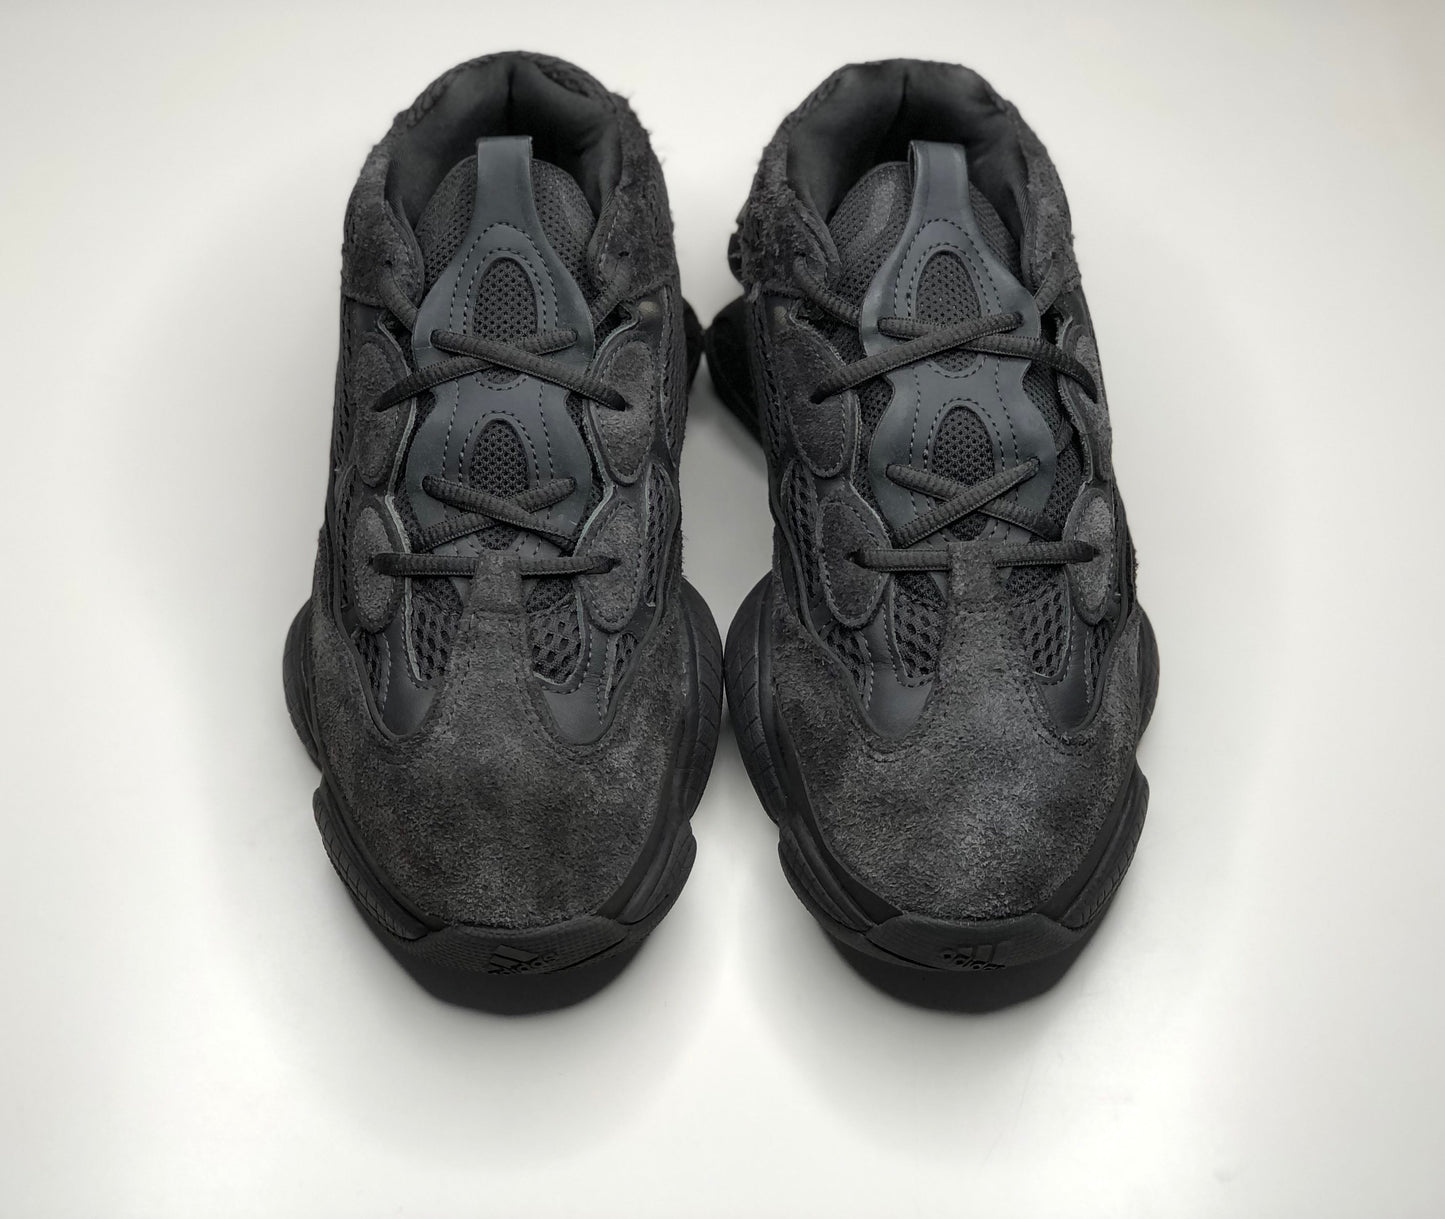 Adidas Yeezy 500 Utility Black size 7 Mens